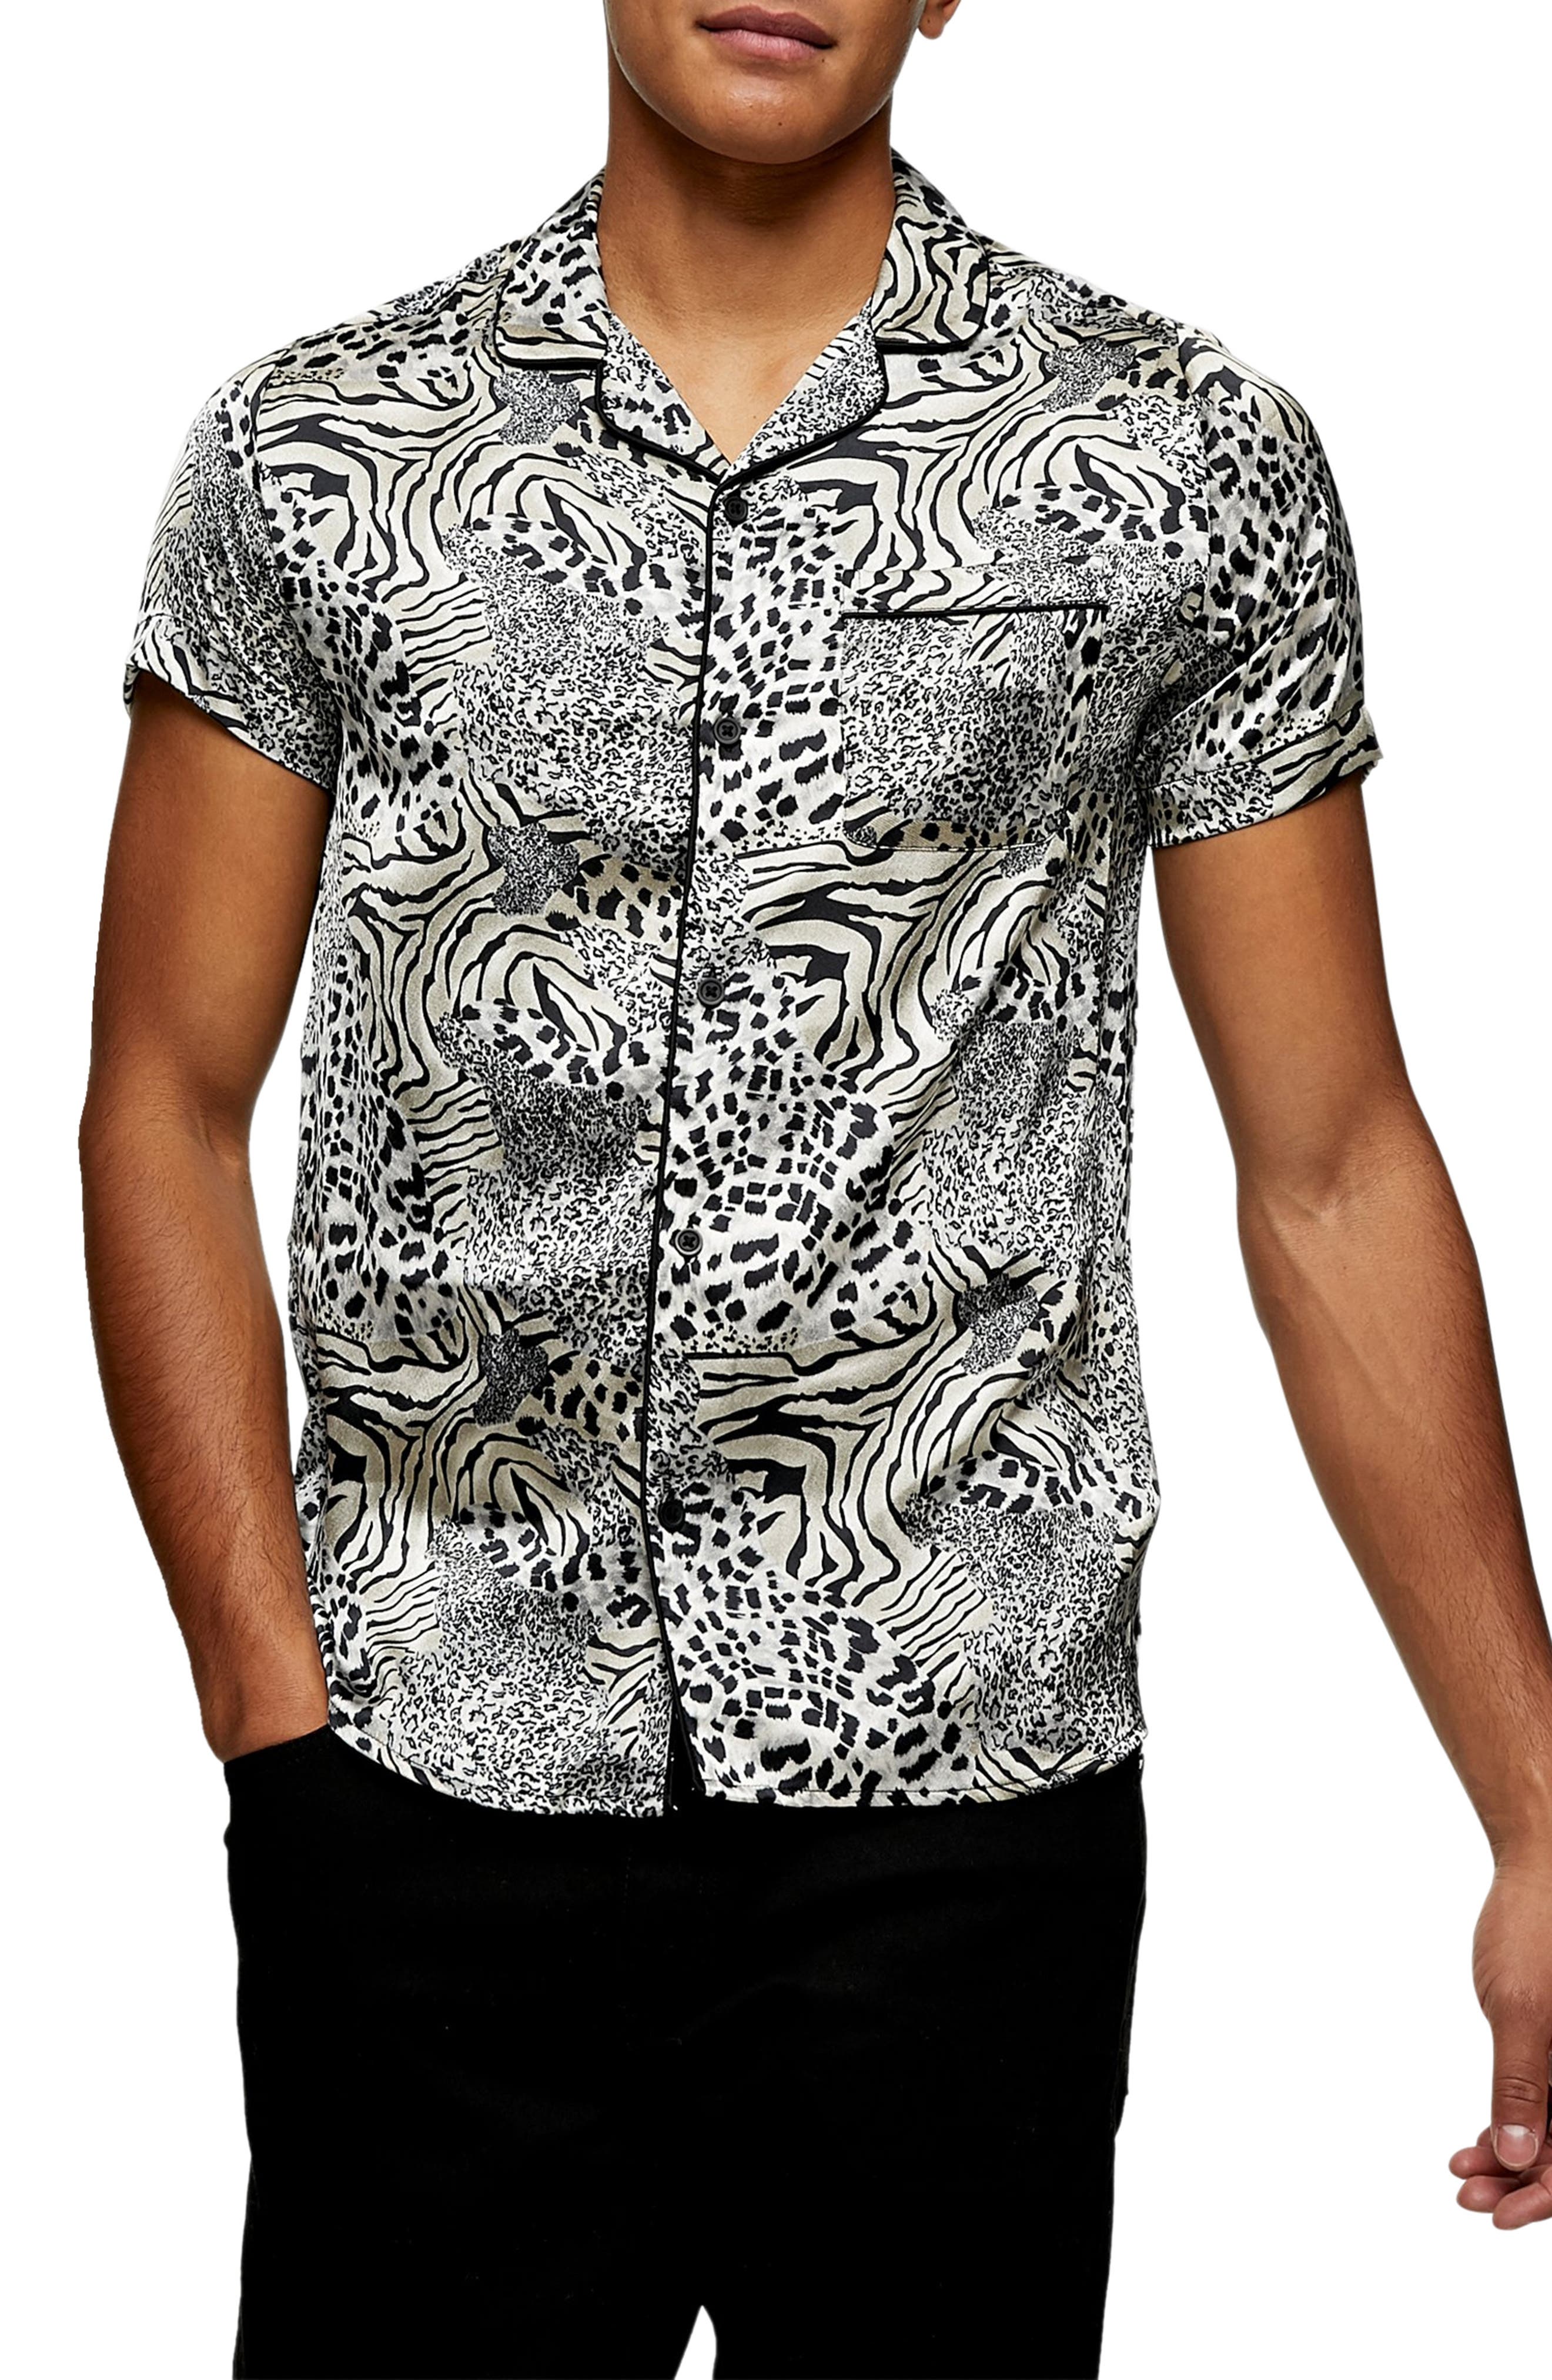 tiger print shirt for men